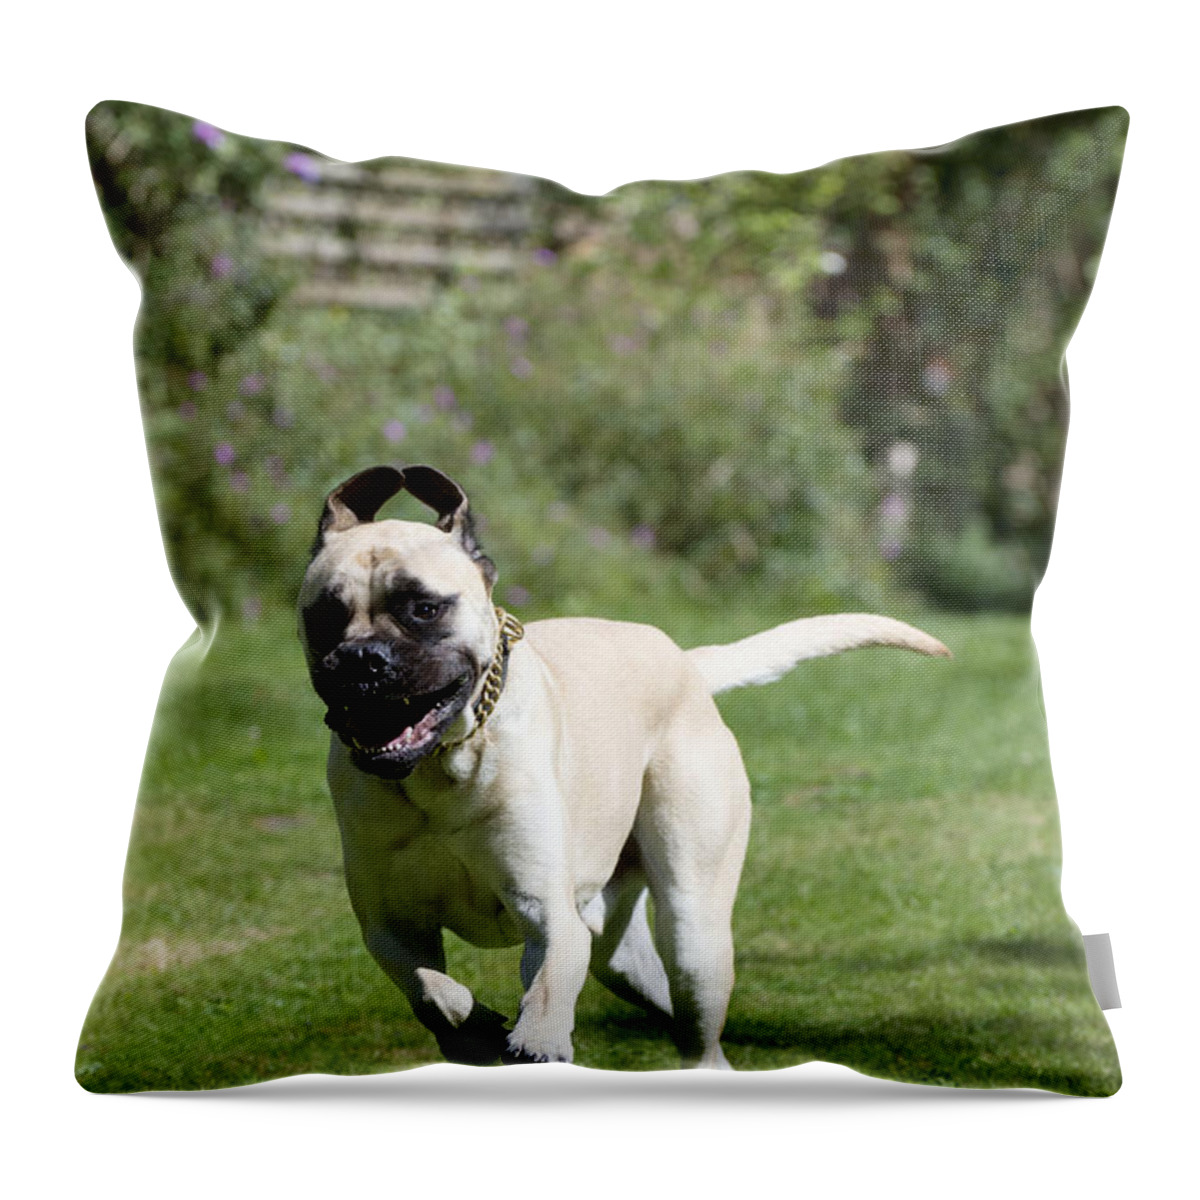 Dog Throw Pillow featuring the photograph Bullmastiff Dog by John Daniels